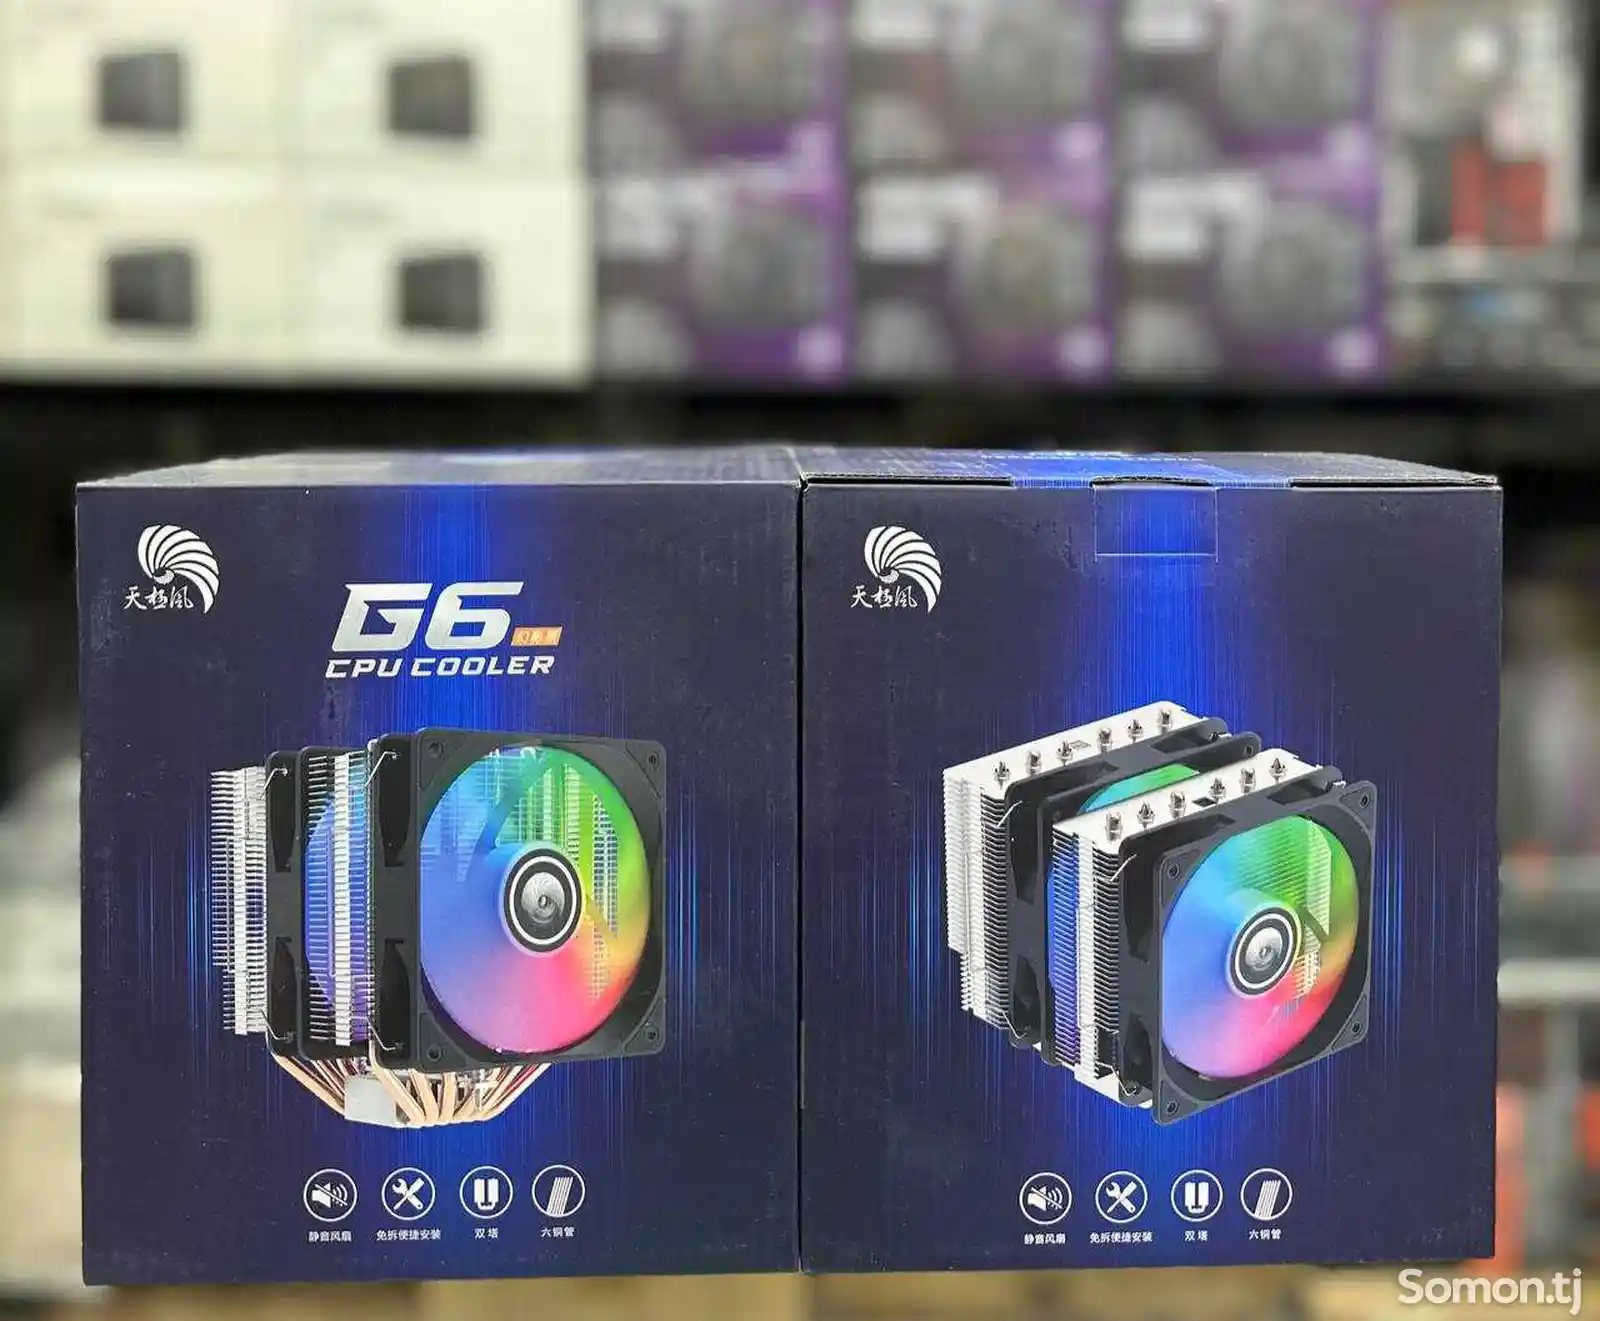 Кулер Cooler G6 RGB